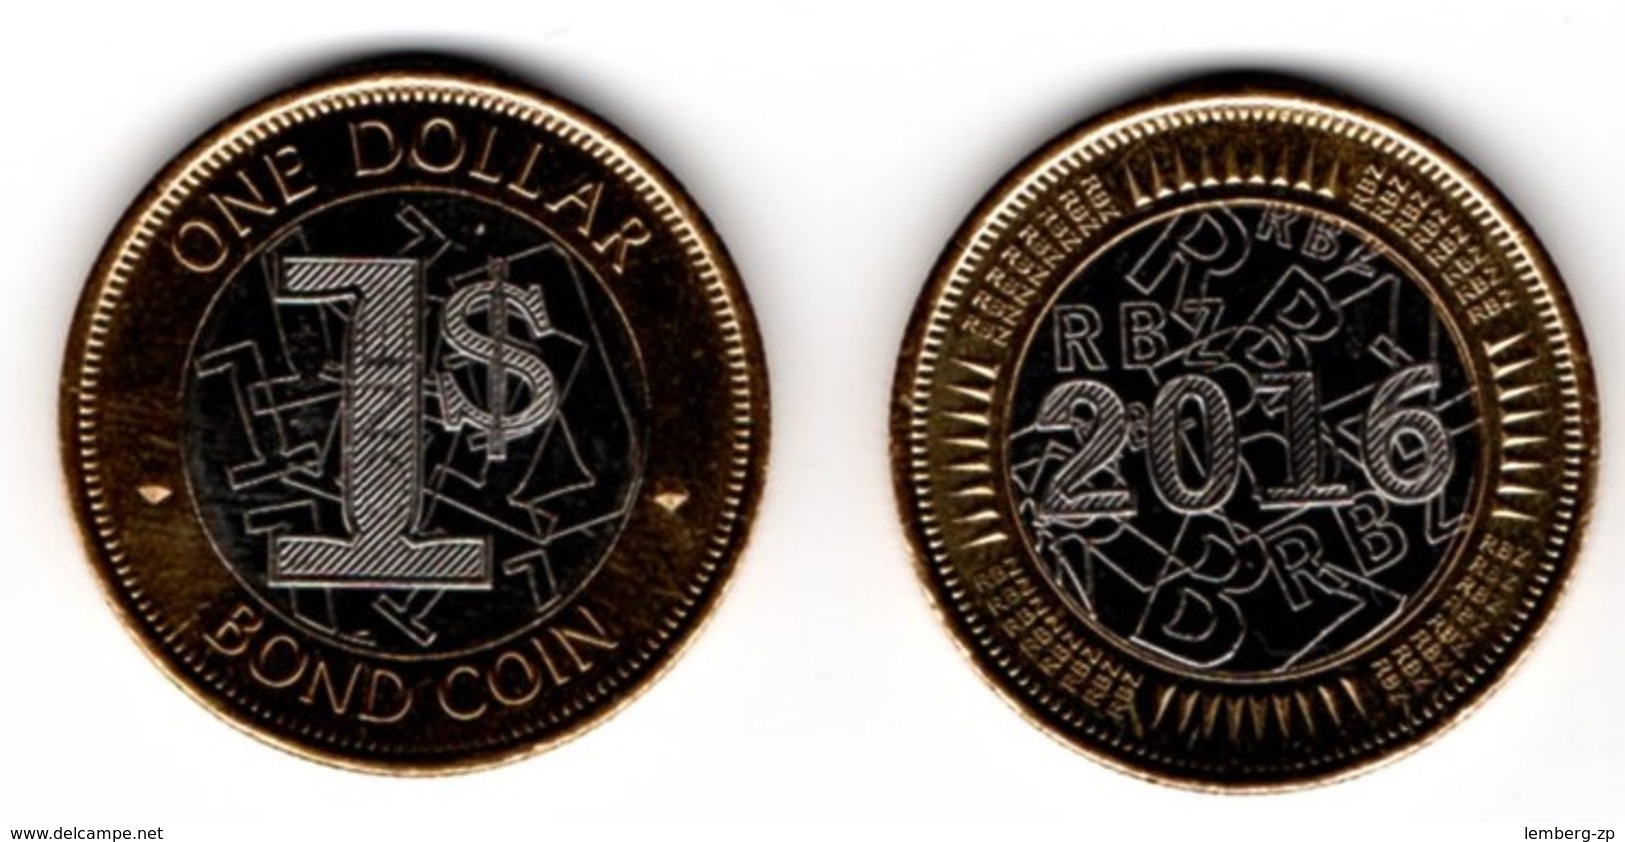 Zimbabwe - 1 Dollar Bond Coin 2016 - 2017 UNC Lemberg-Zp - Zimbabwe